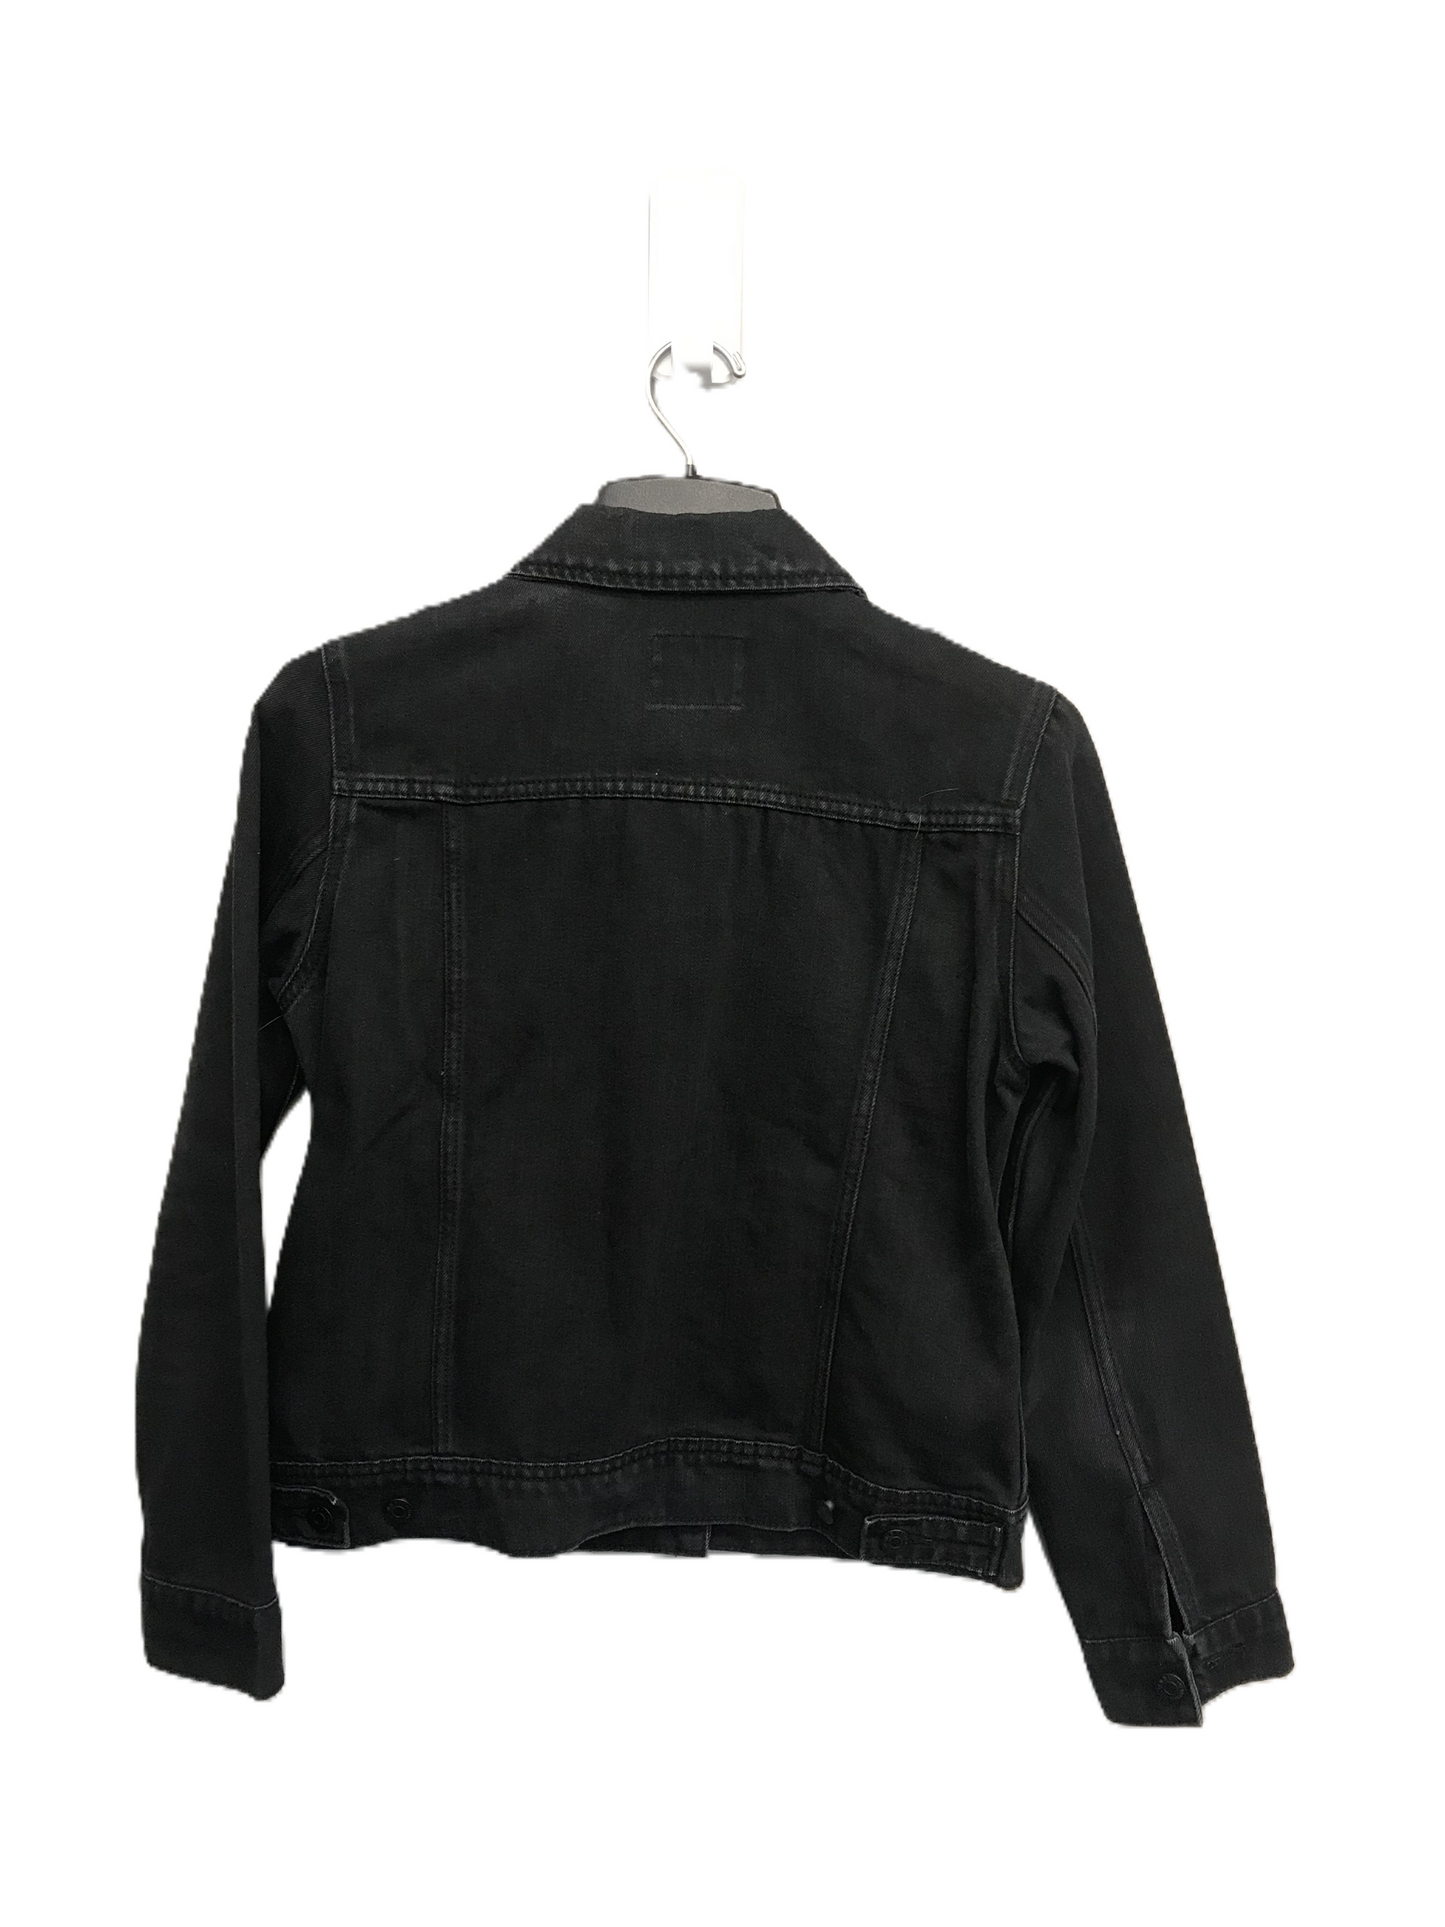 Black Jacket Denim By Old Navy, Size: M